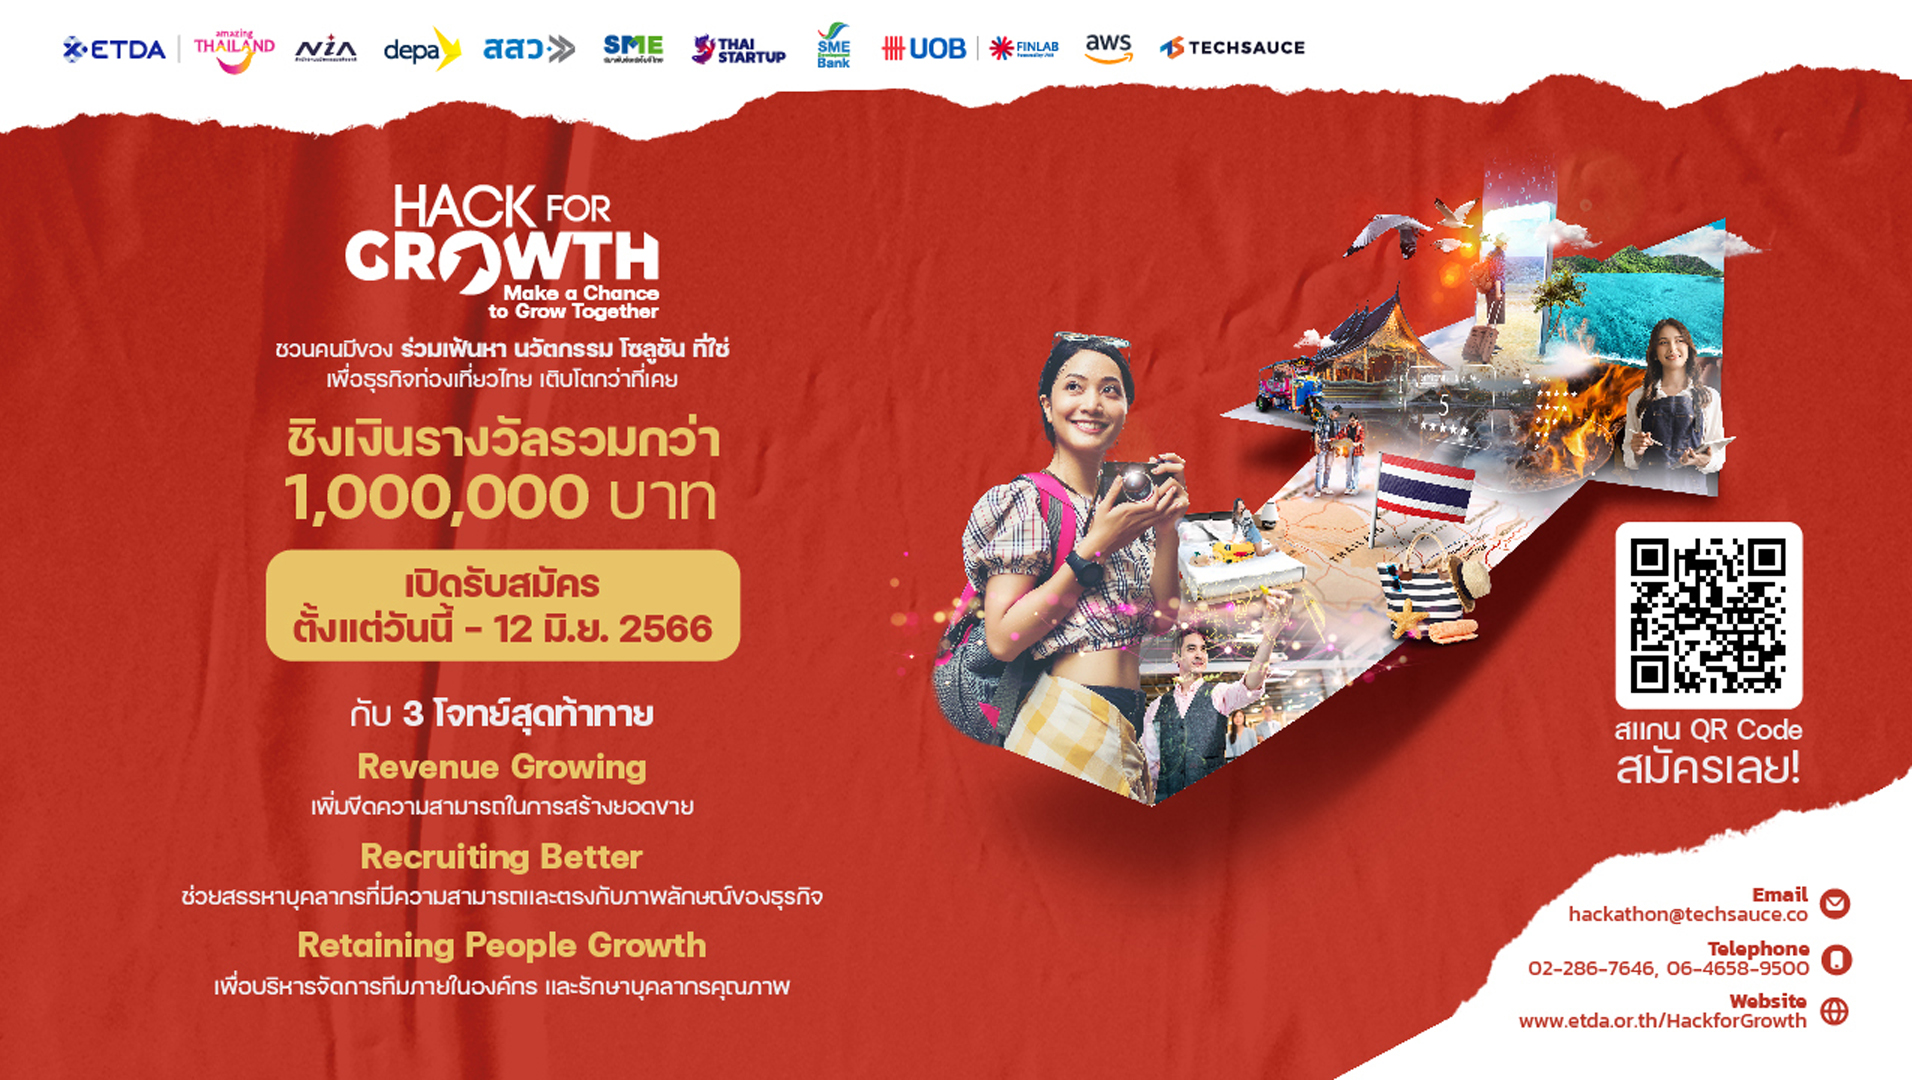 ETDA จัดต่อ! กับ “HACK for GROWTH”  เฟ้นหาสุดยอดนวัตกรรม โซลูชัน เพื่อธุรกิจท่องเที่ยวไทย ใครมีของ ส